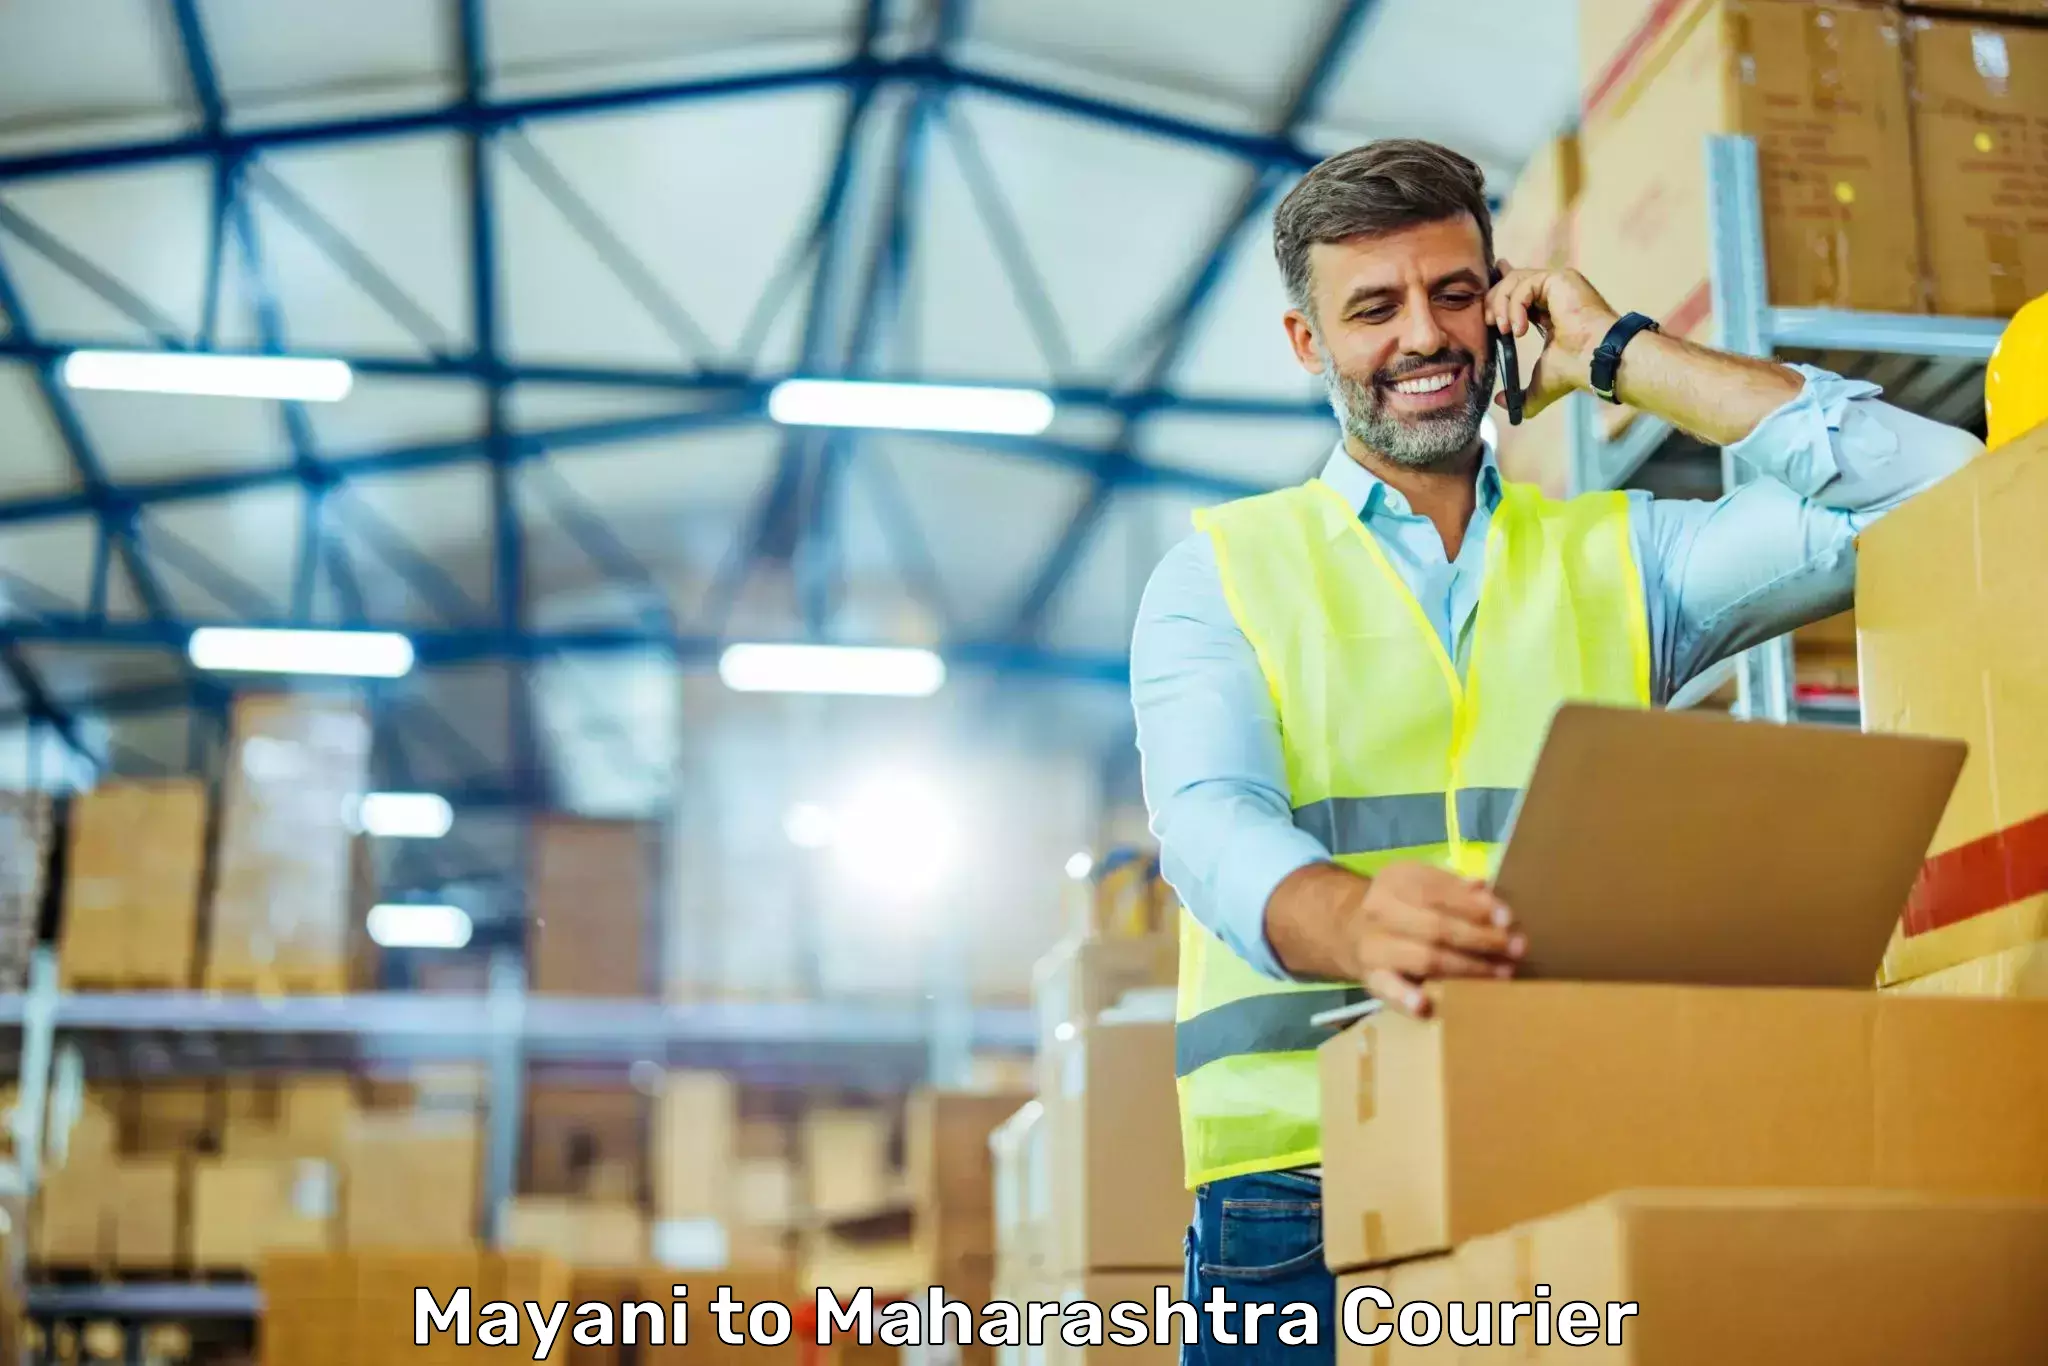 High-performance logistics Mayani to Alephata